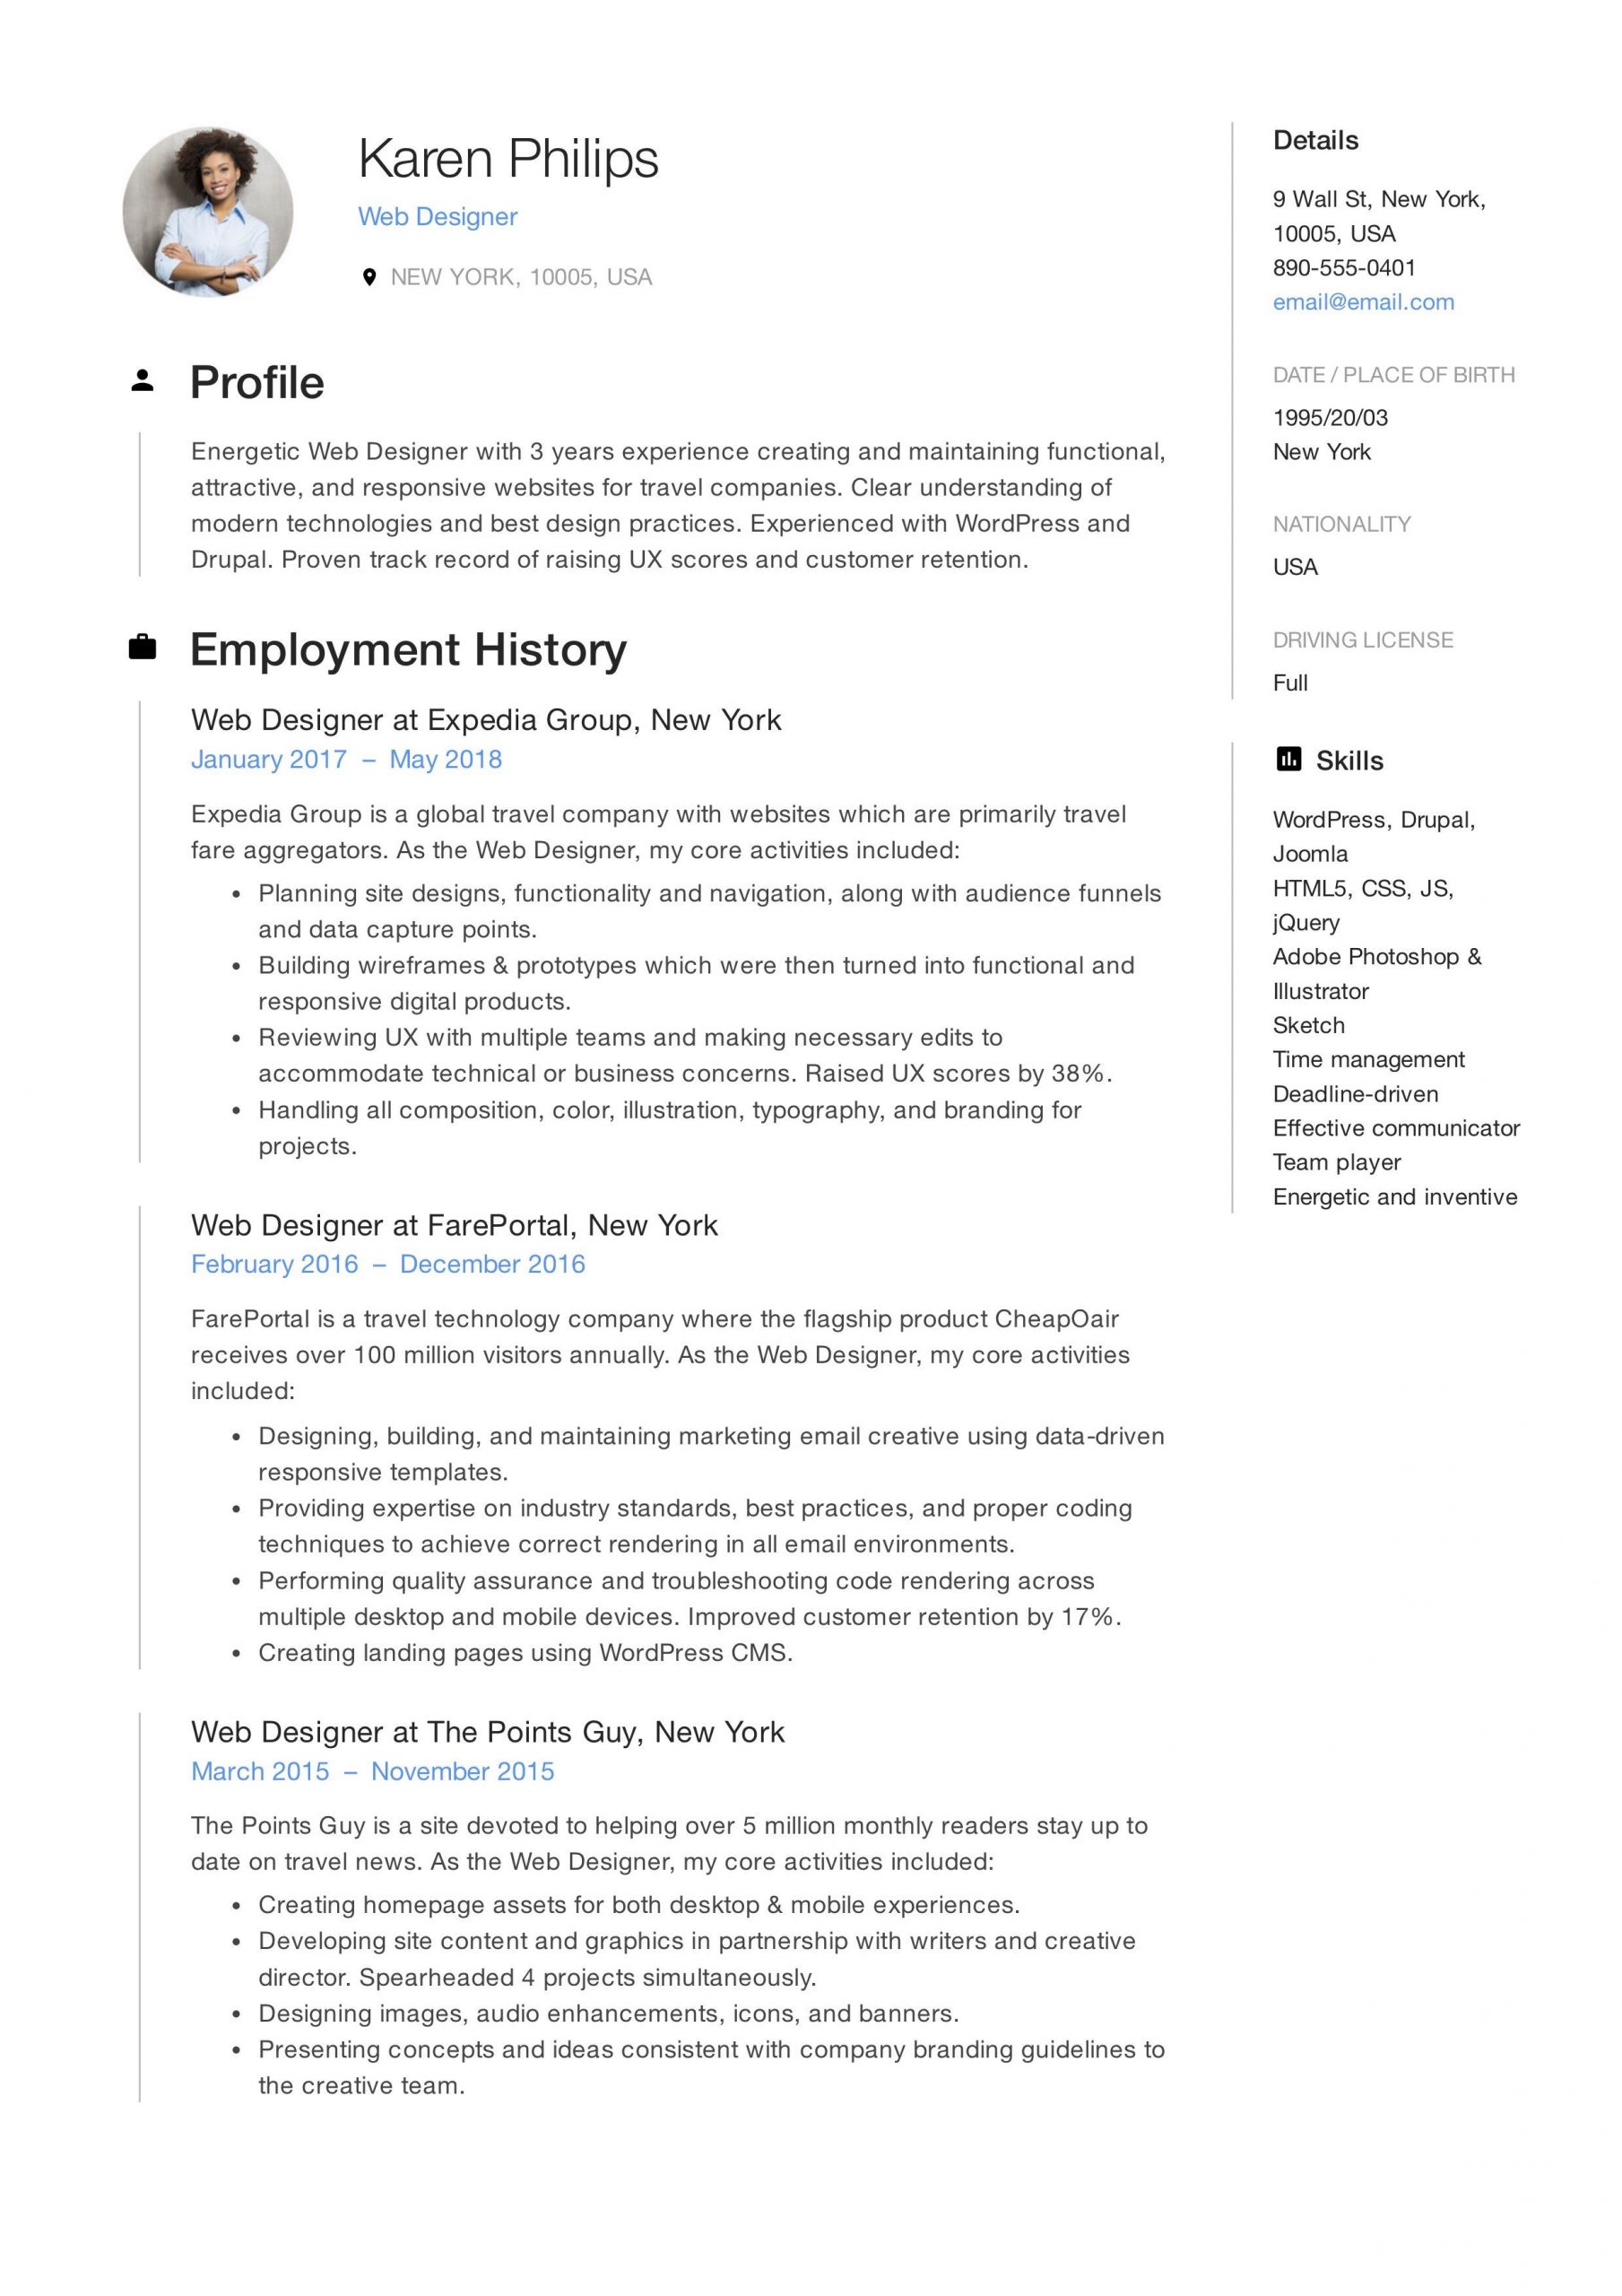 web developer resume sample